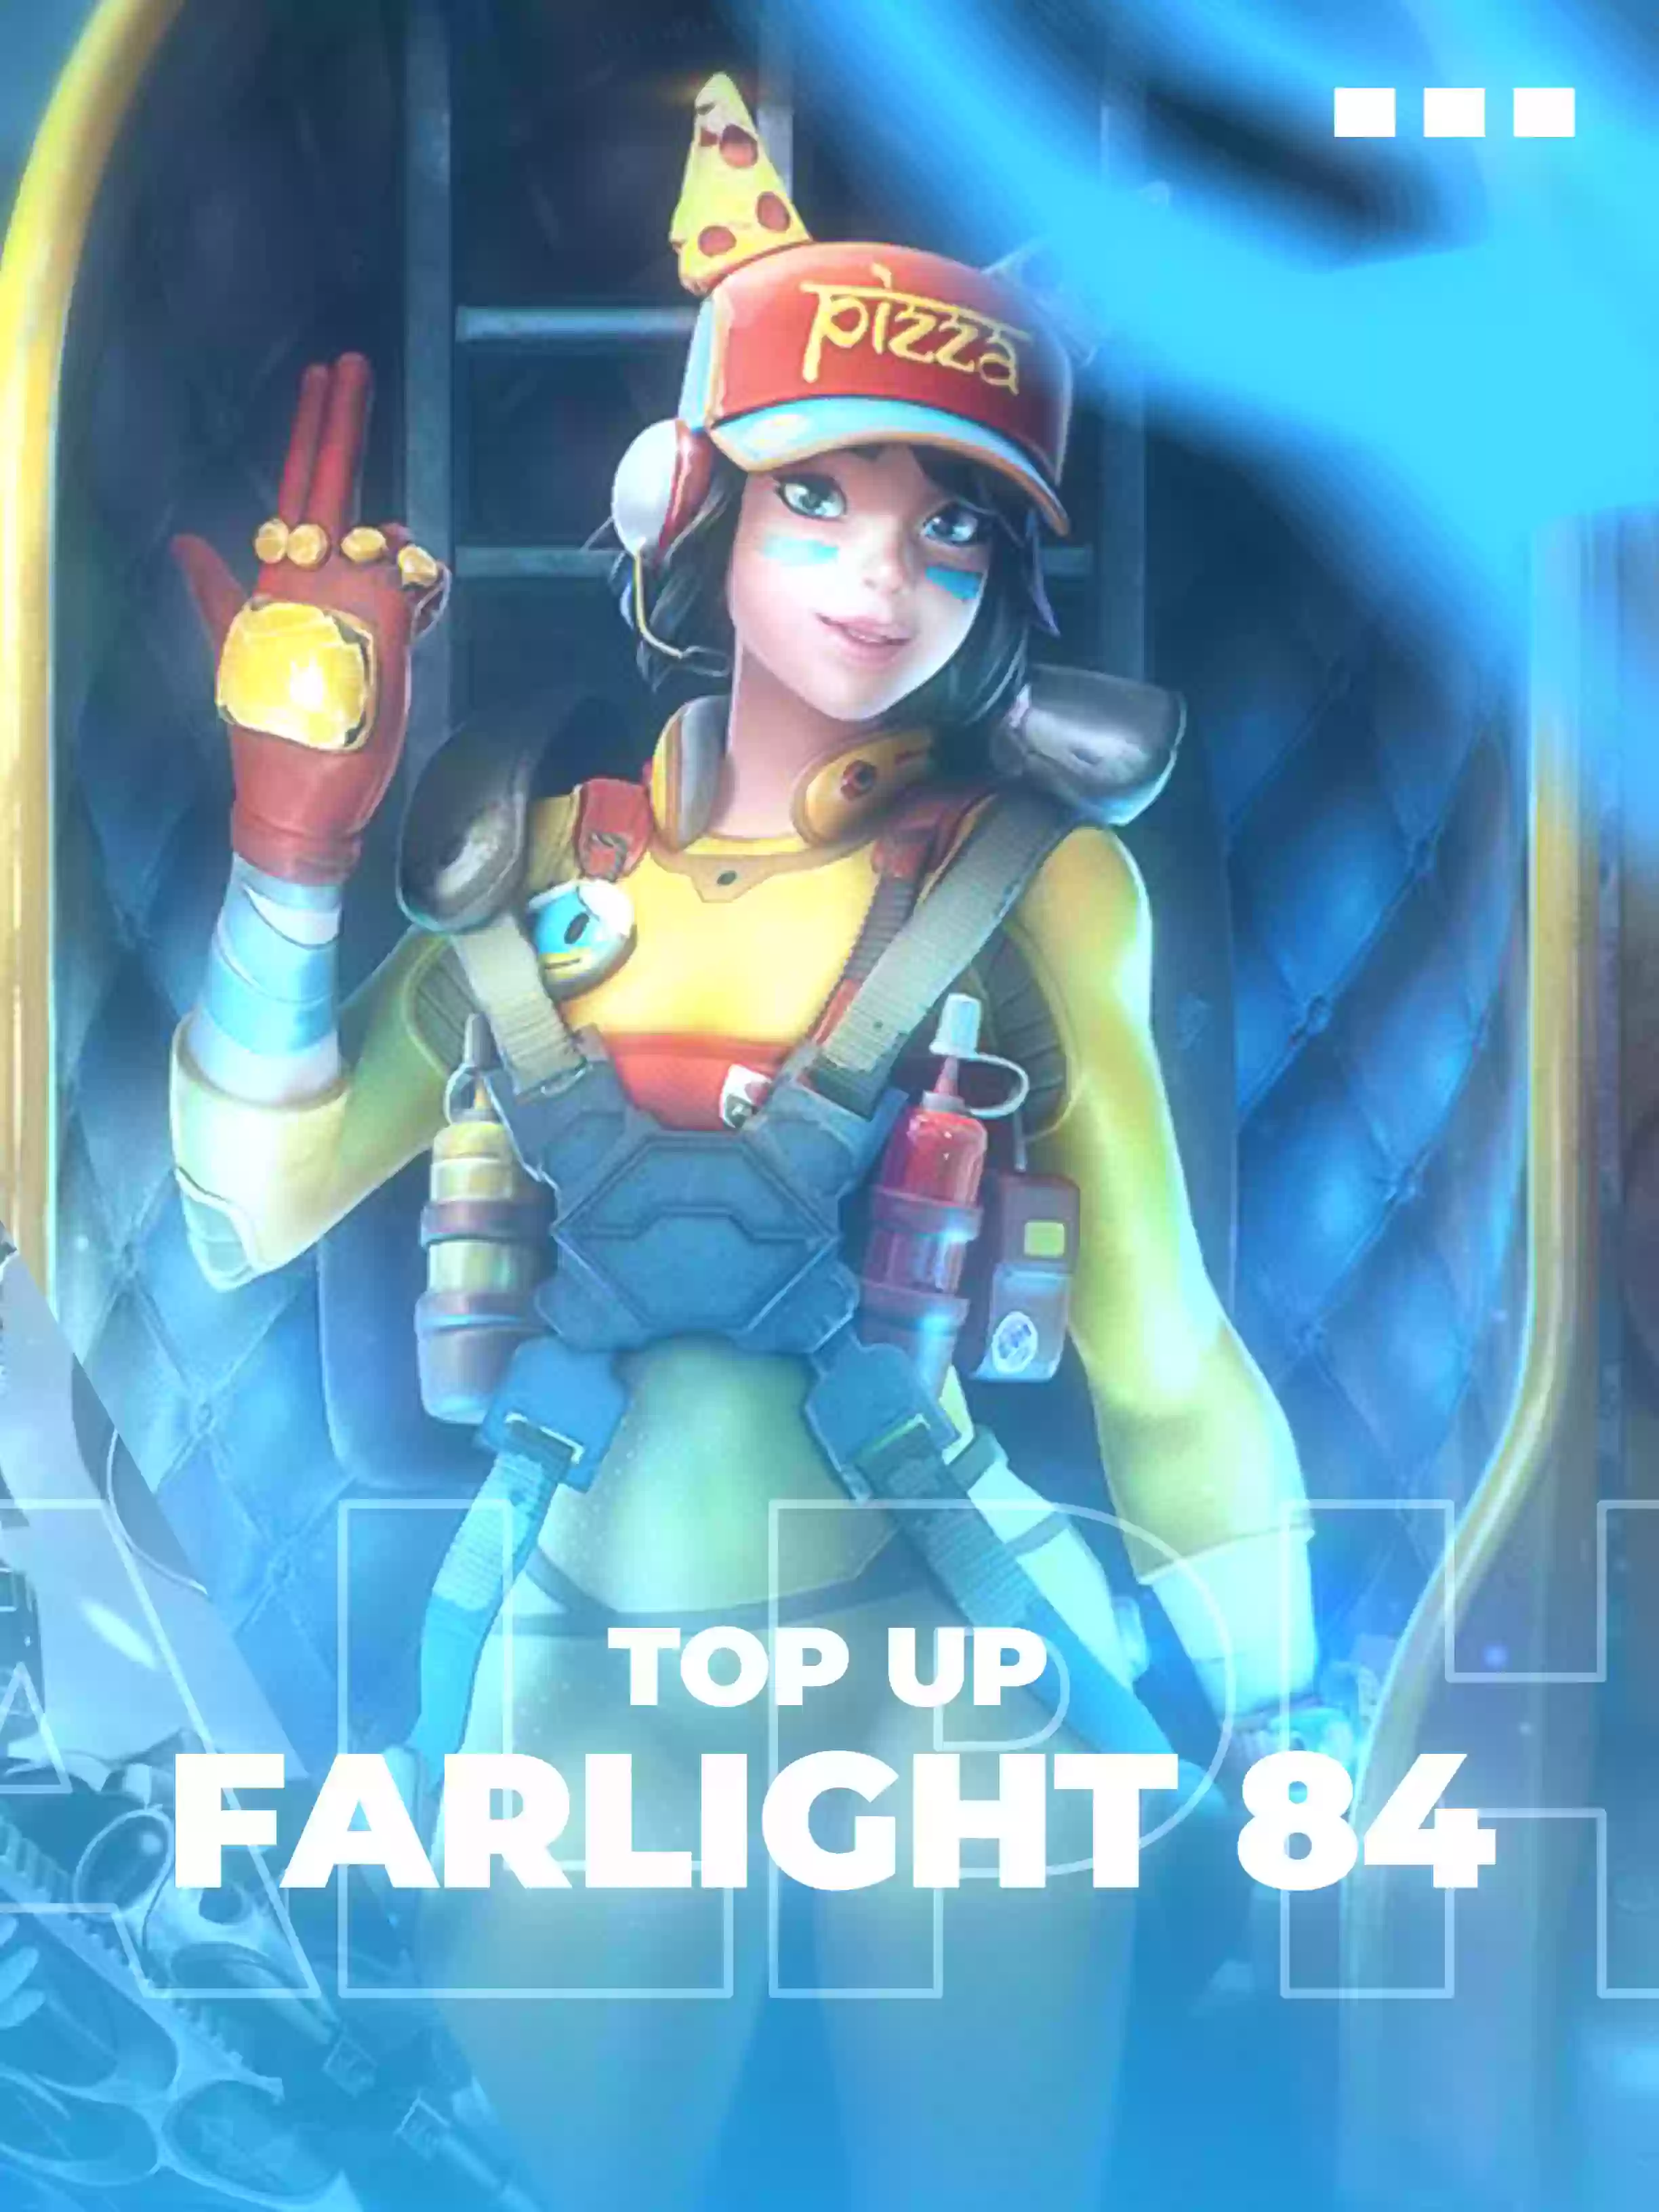 Farlight 84  Murah